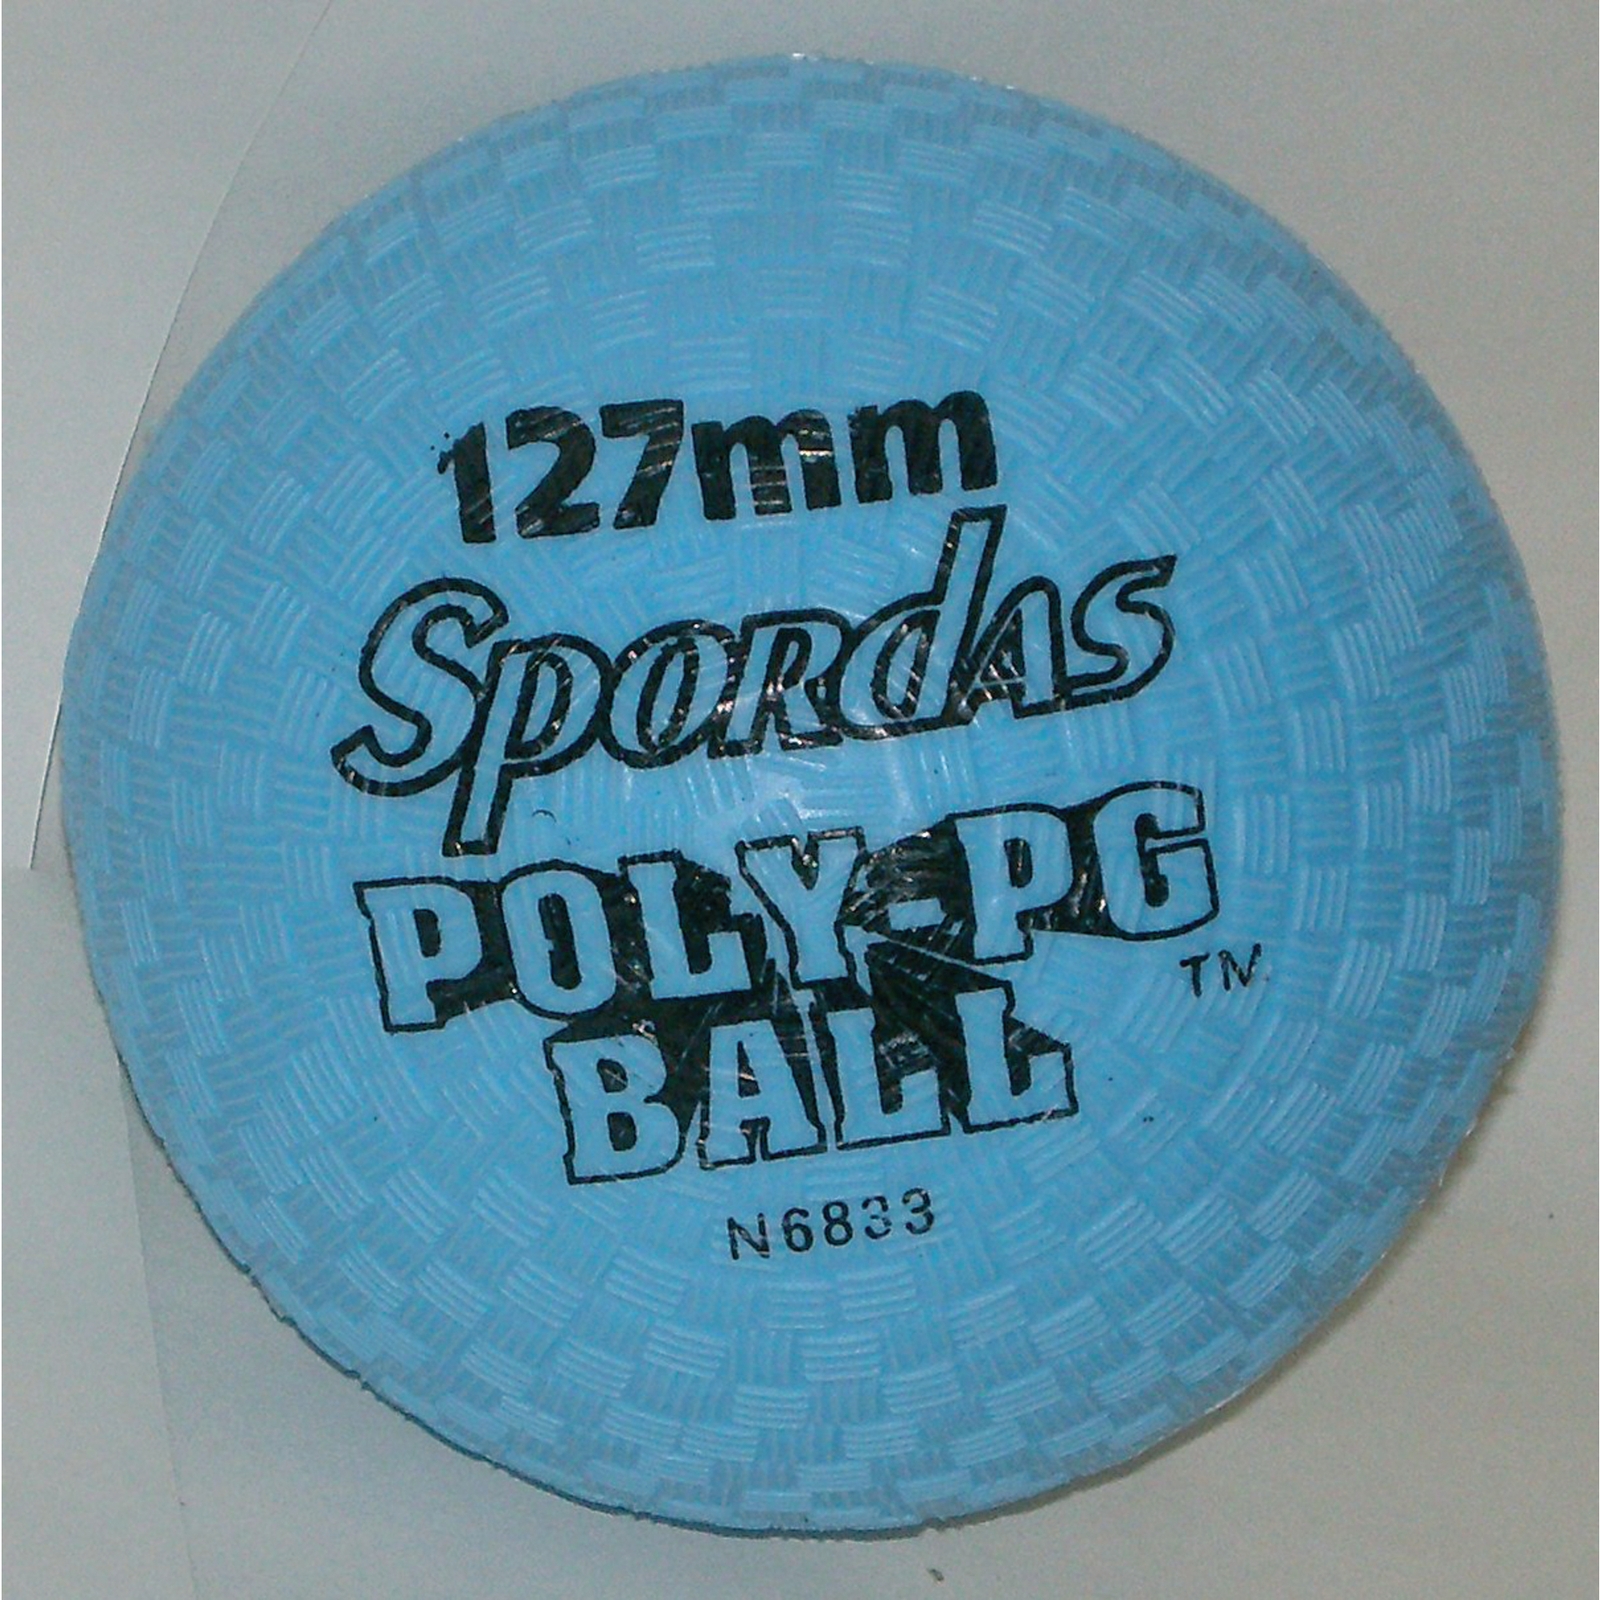 Spordas Poly PG Ball 127mm